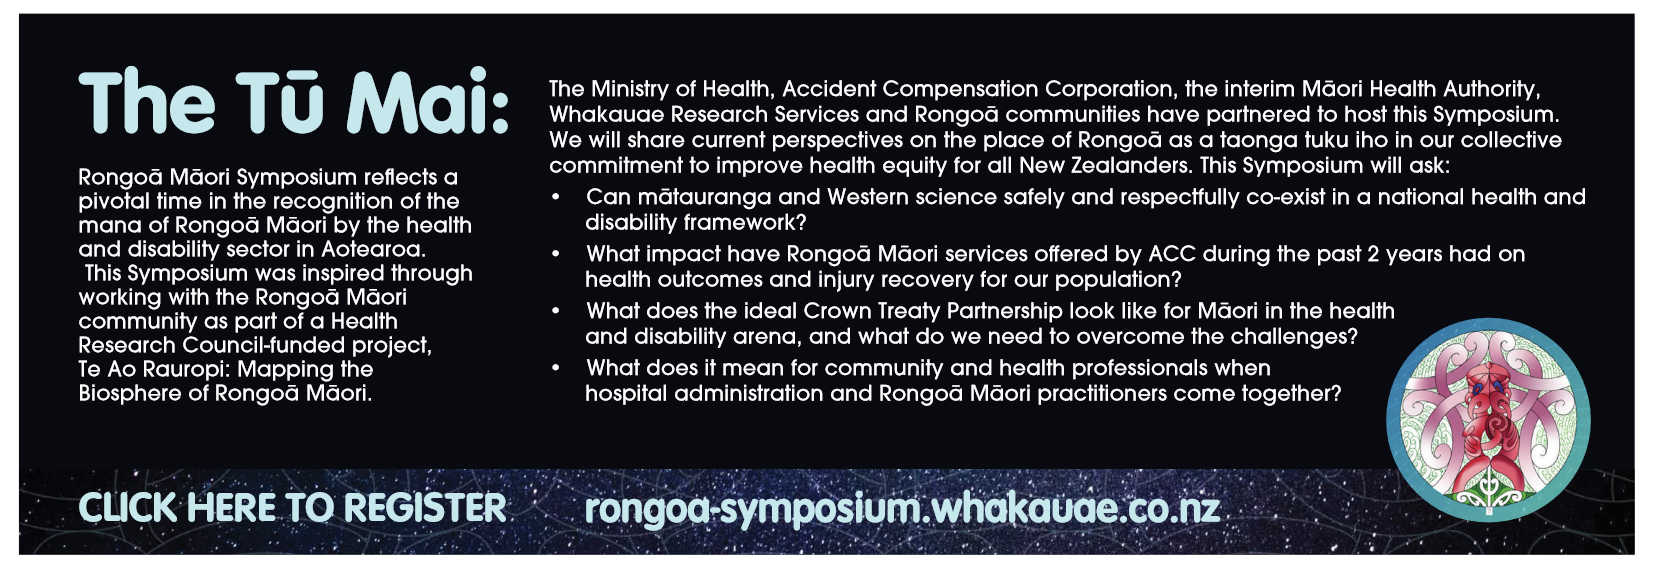 https://rongoa-symposium.whakauae.co.nz/register